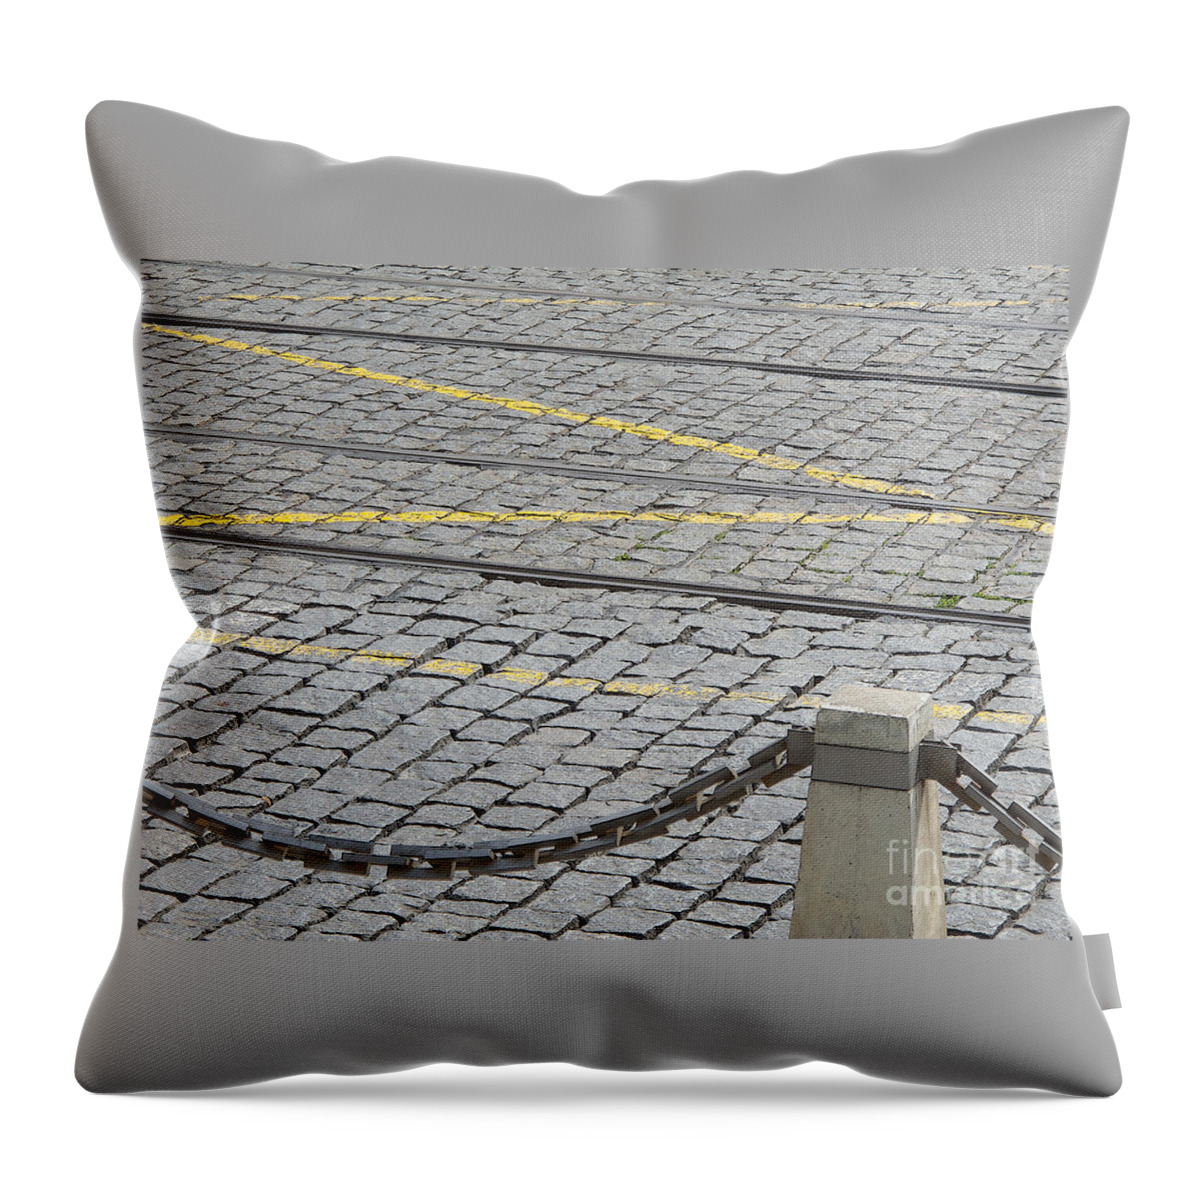 Prague Throw Pillow featuring the photograph Cobblestones and Rails by Ann Horn